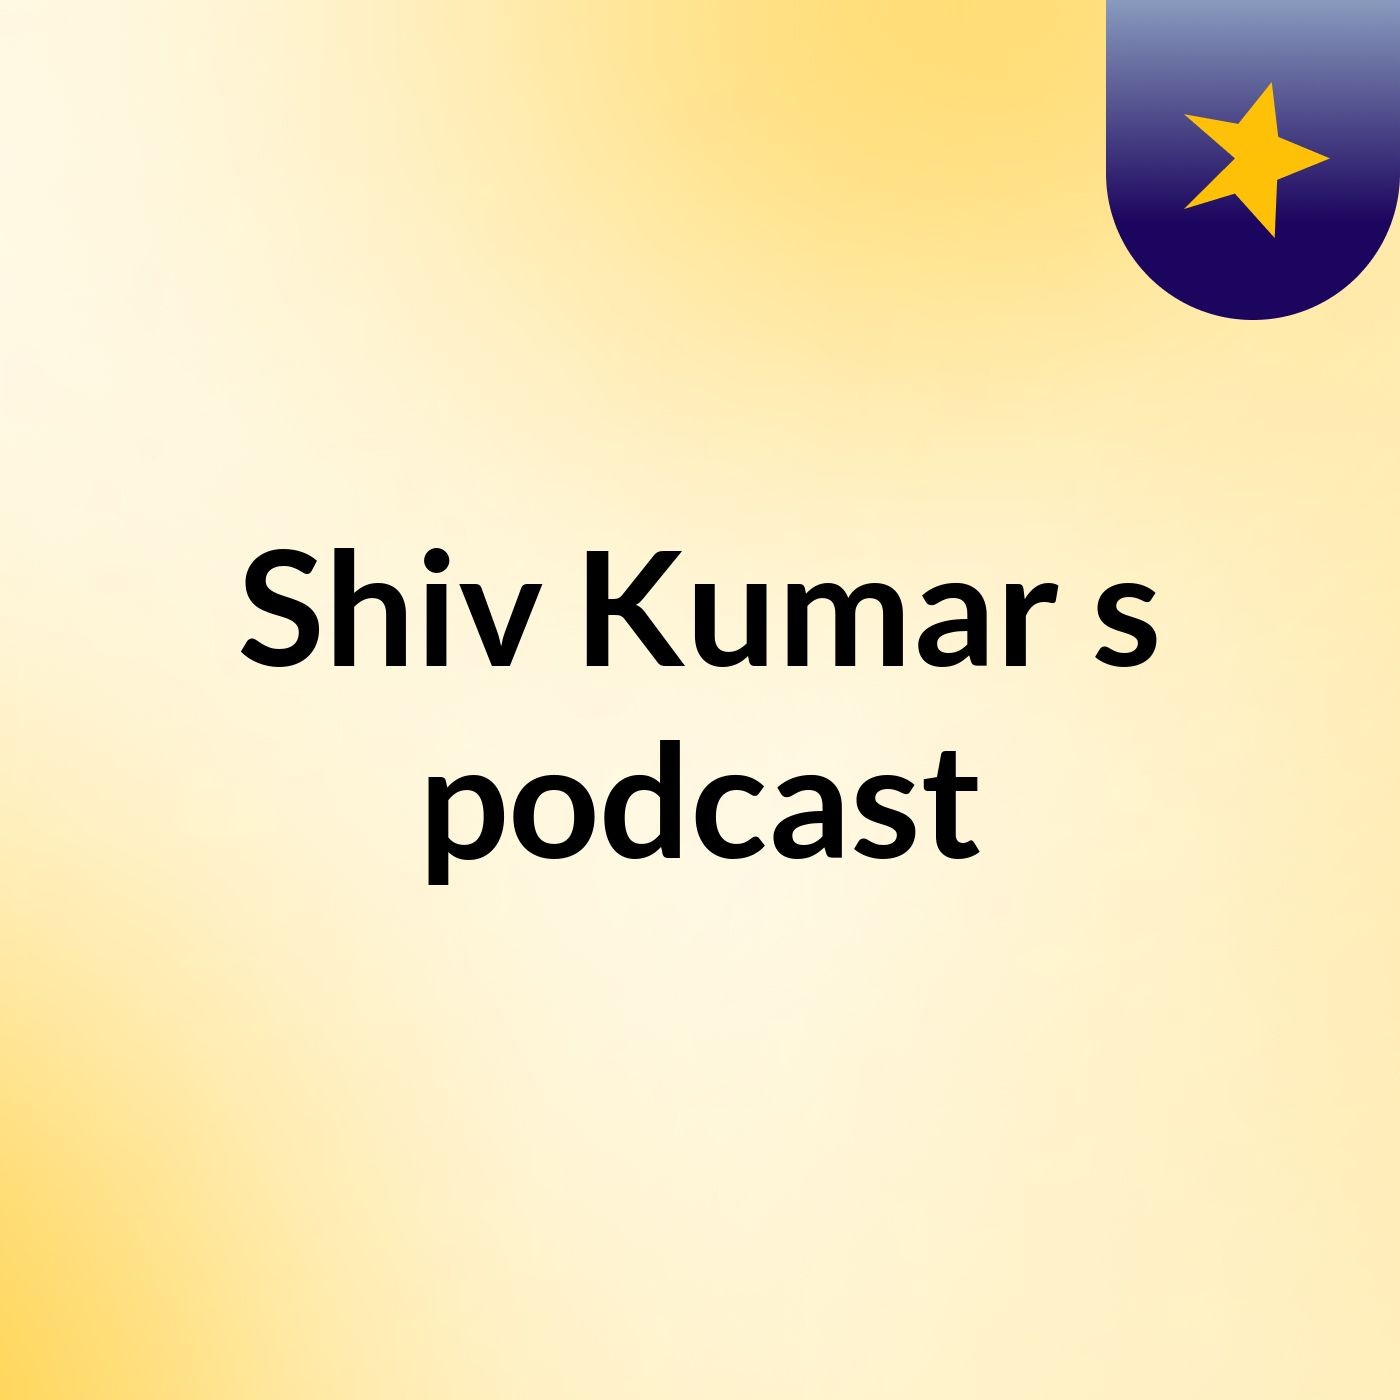 Episode 2 - Shiv Kumar's podcast